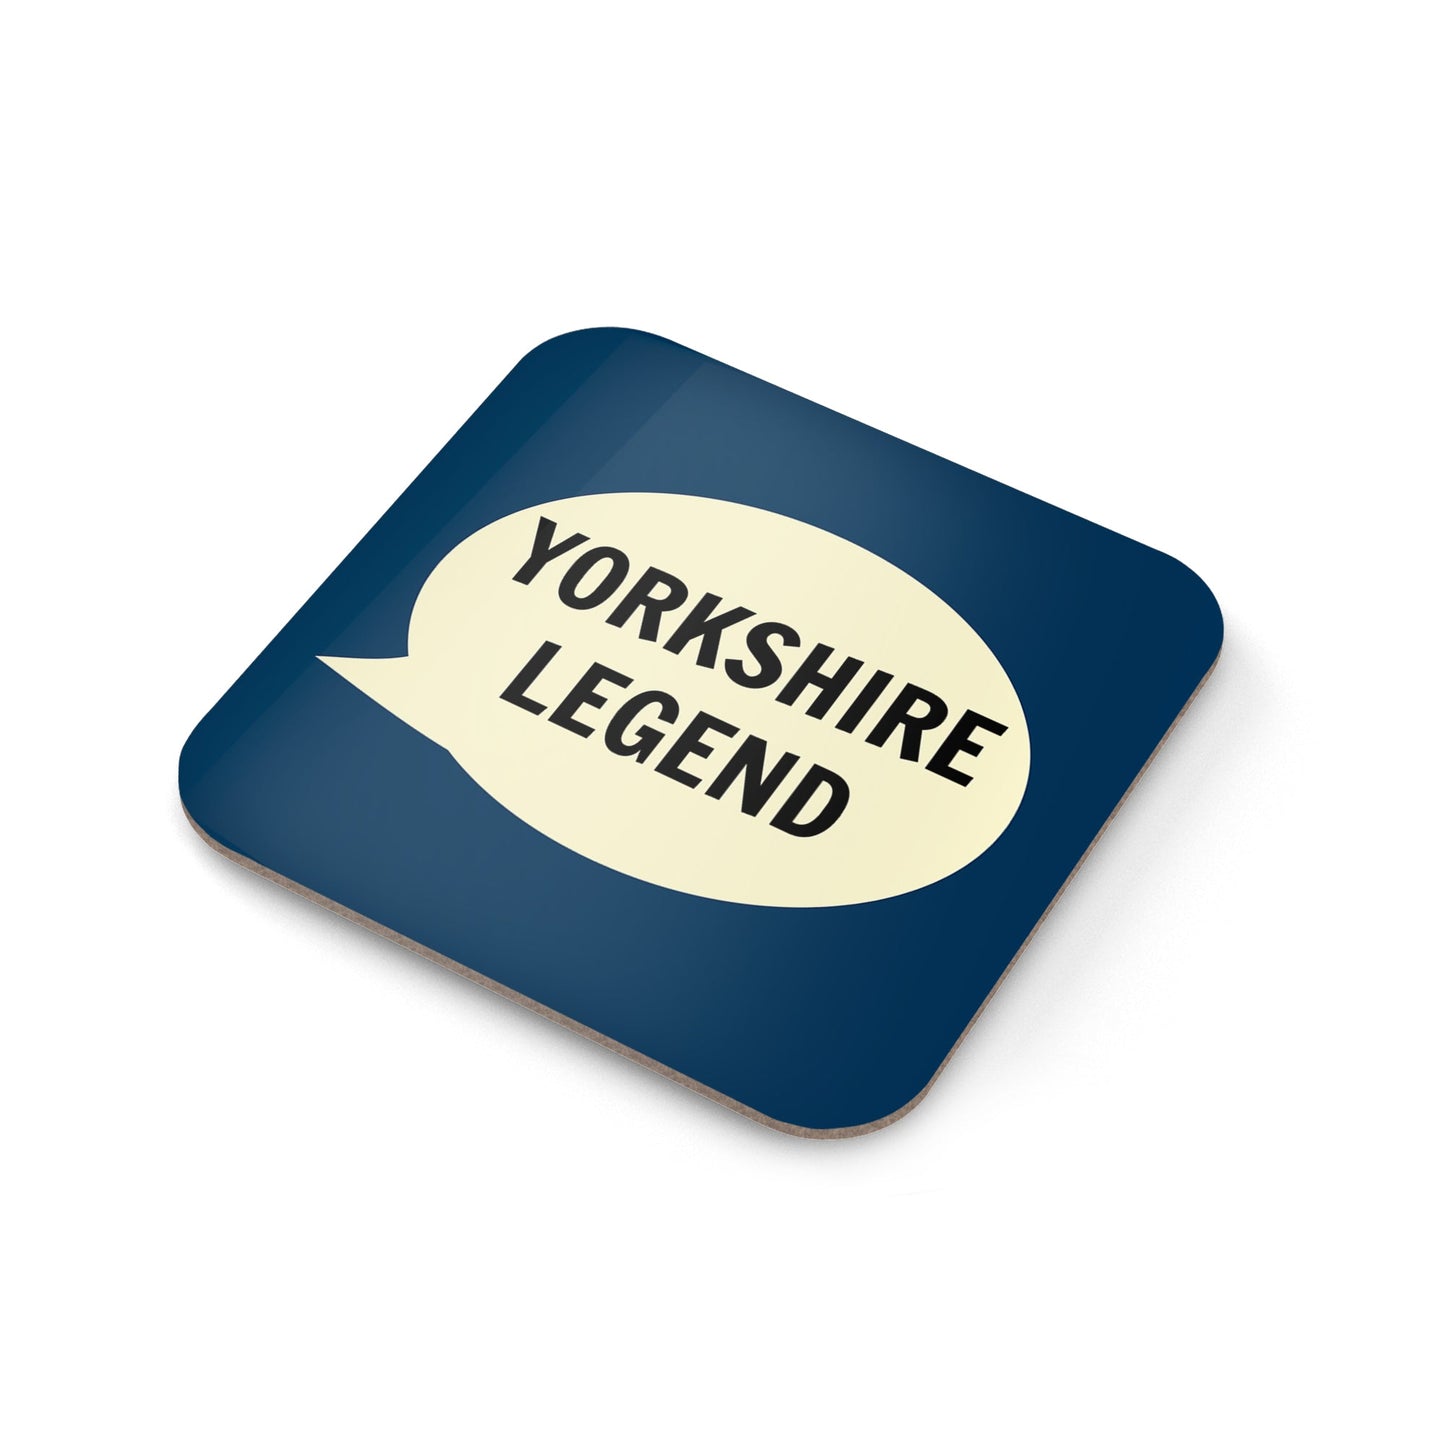 Yorkshire Legend Coaster - The Great Yorkshire Shop